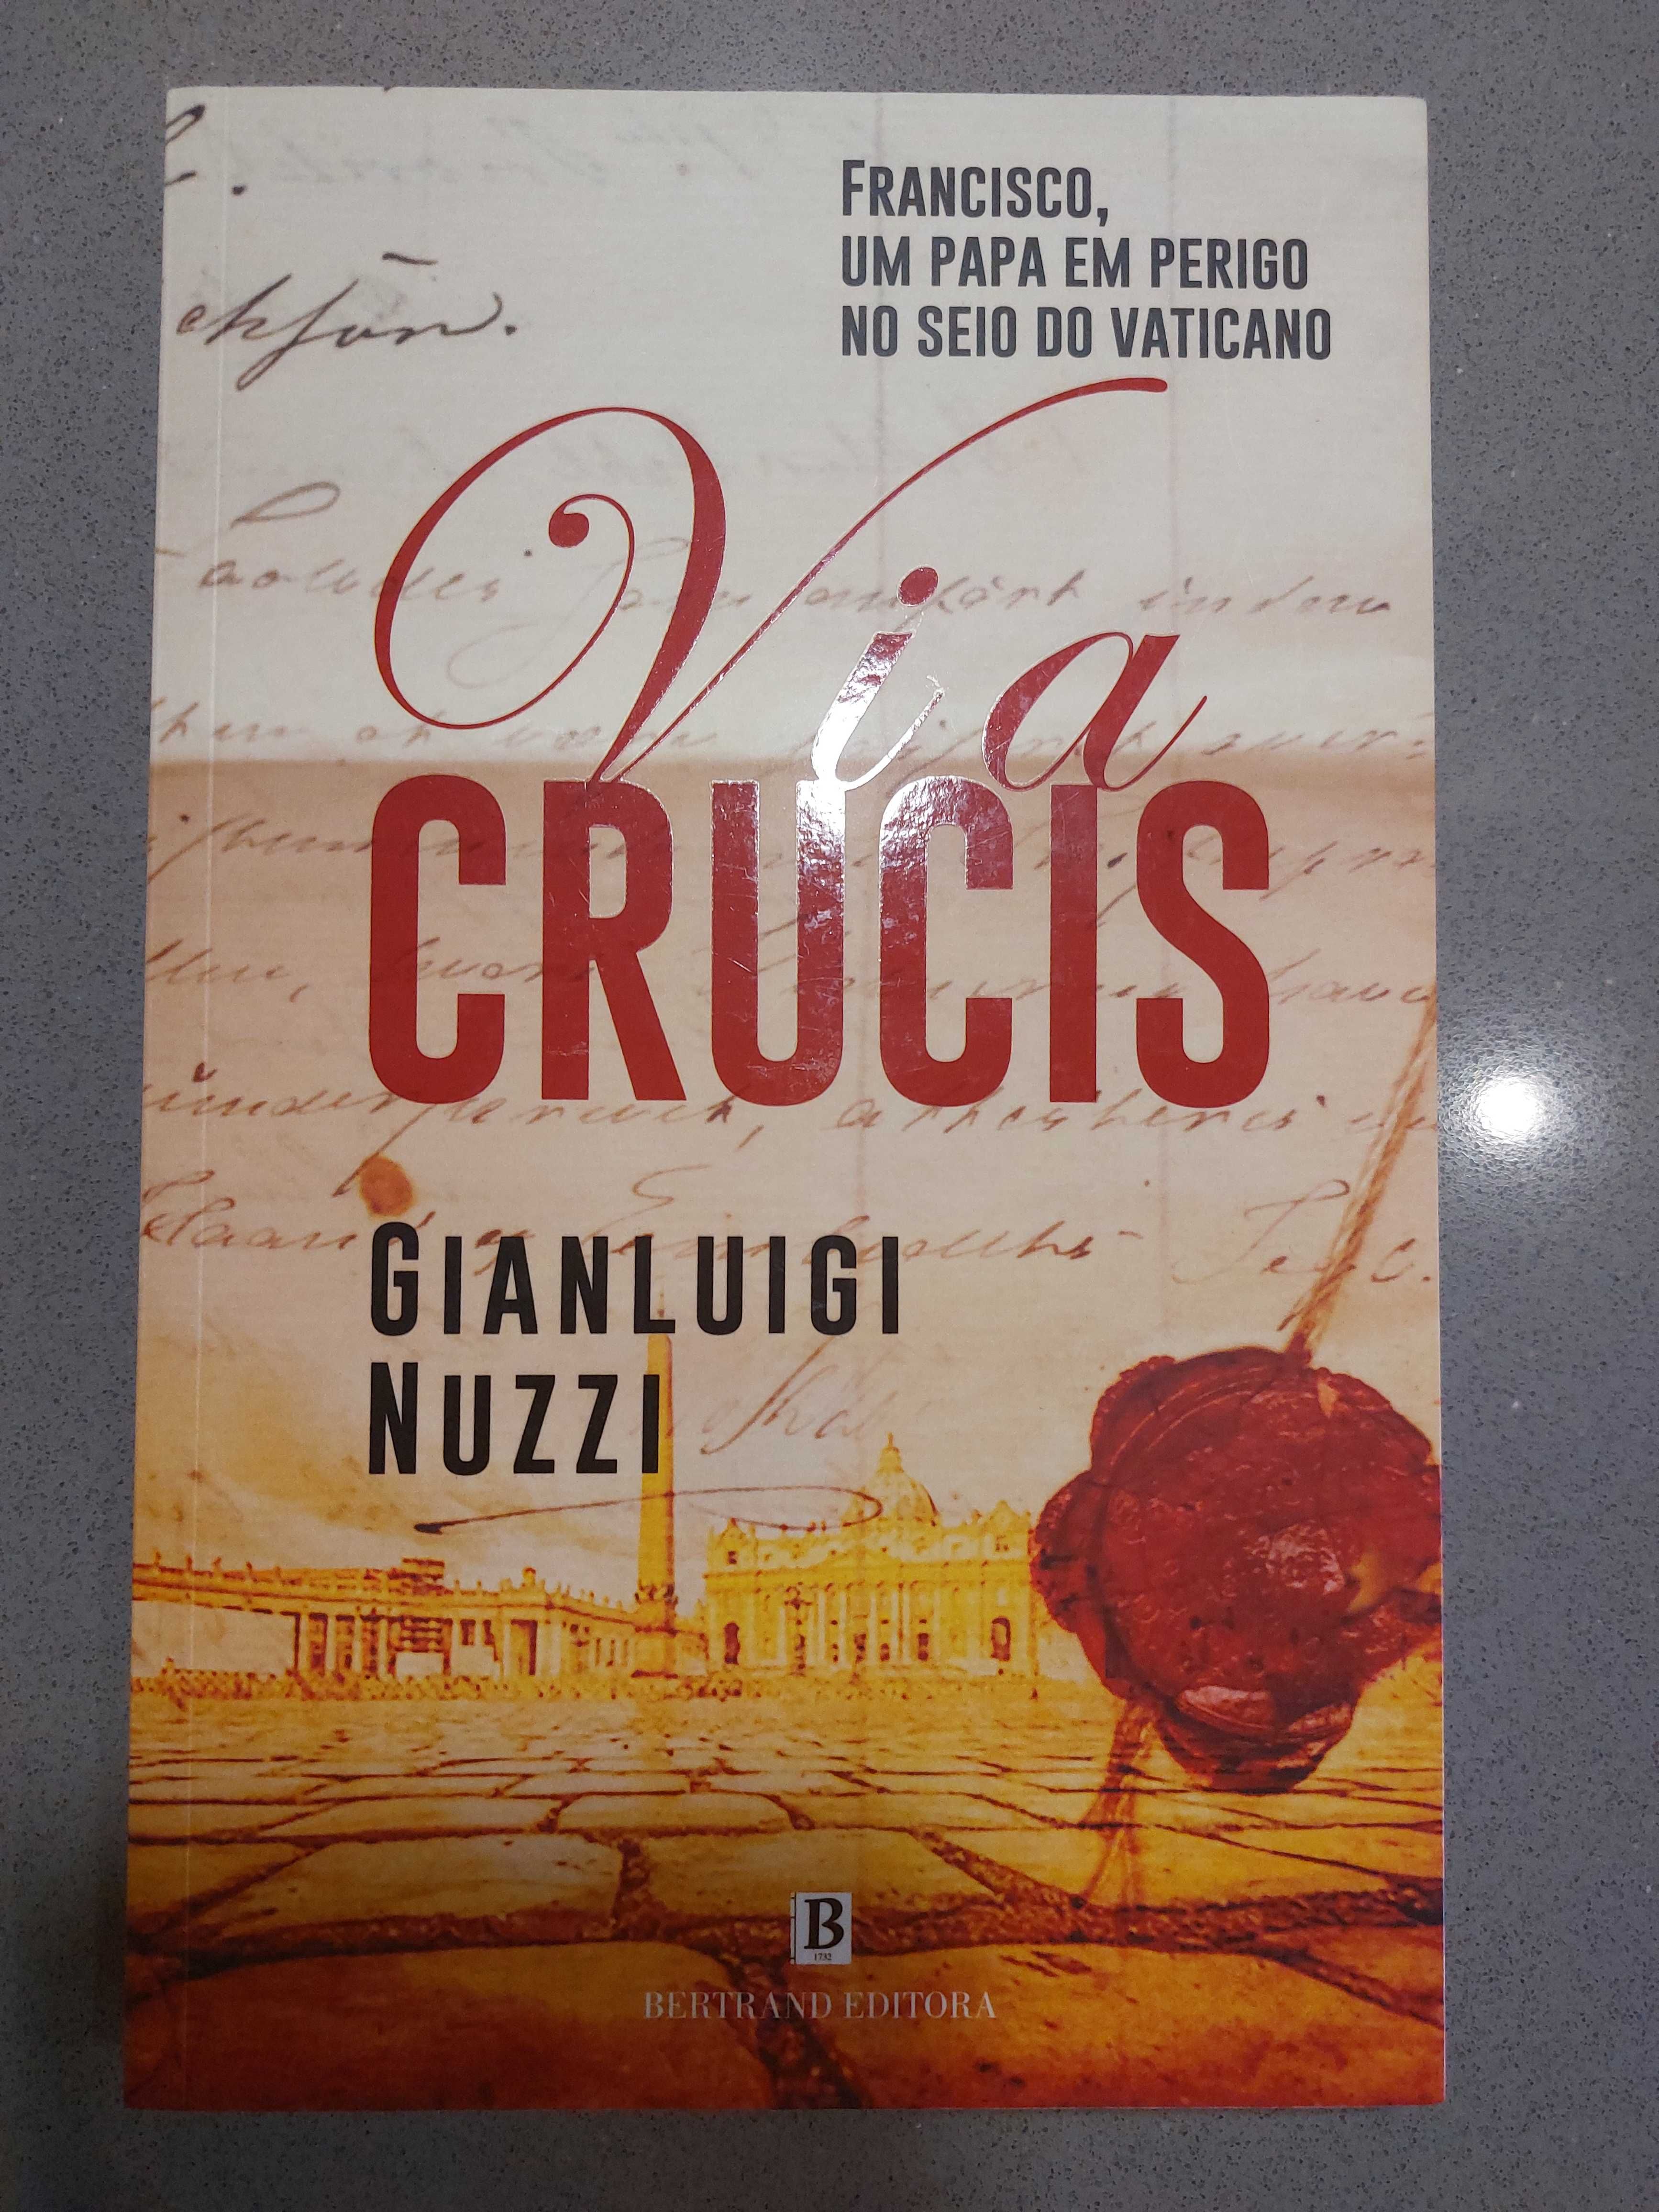 Gianluigi Nuzzi - Via Crucis (PORTES GRATIS)